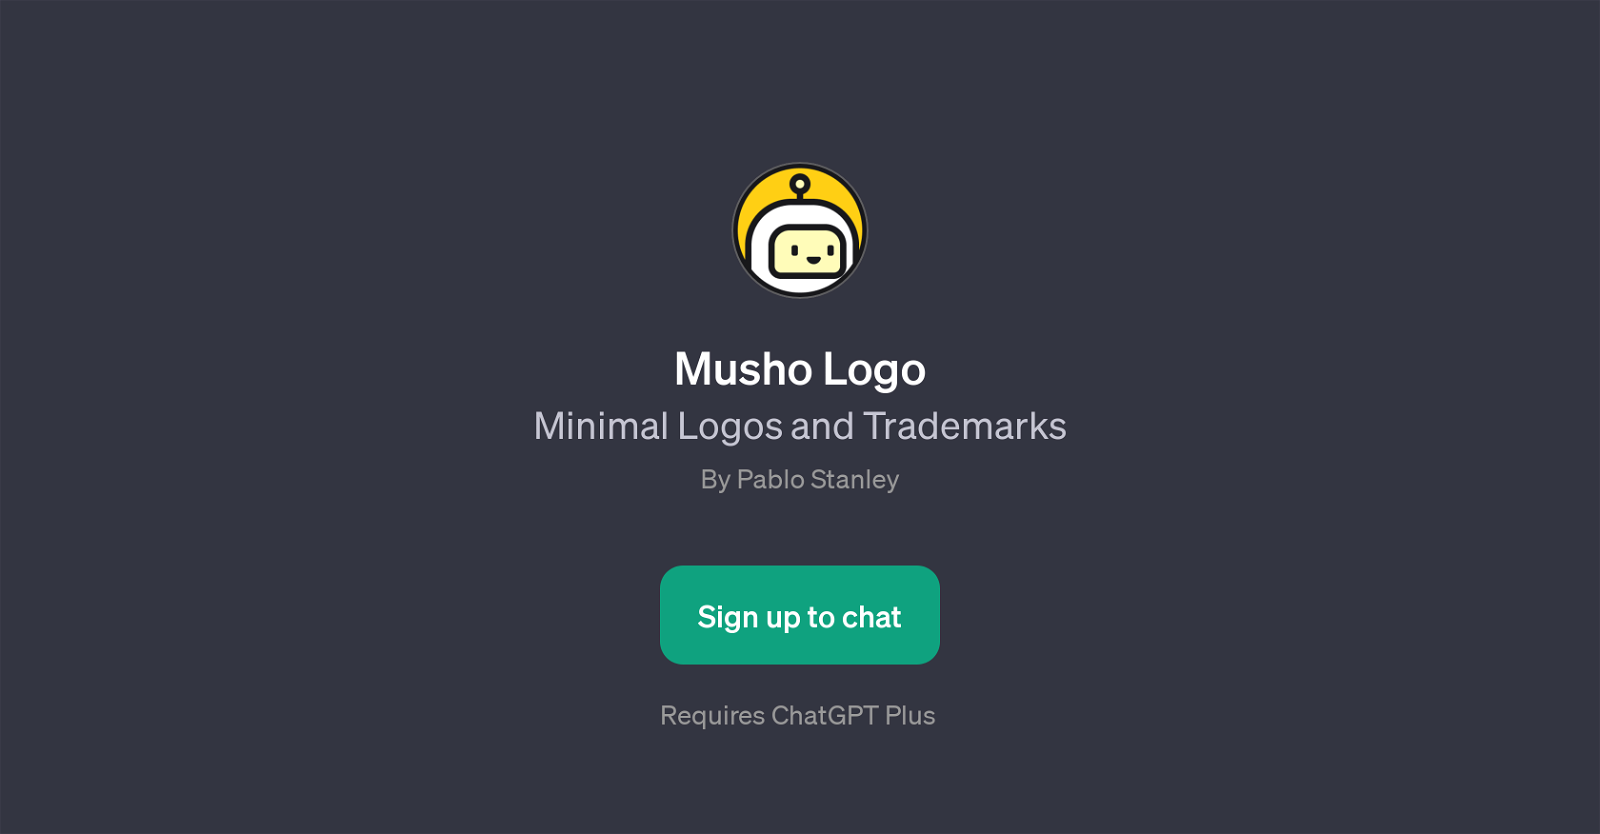 Musho Logo website